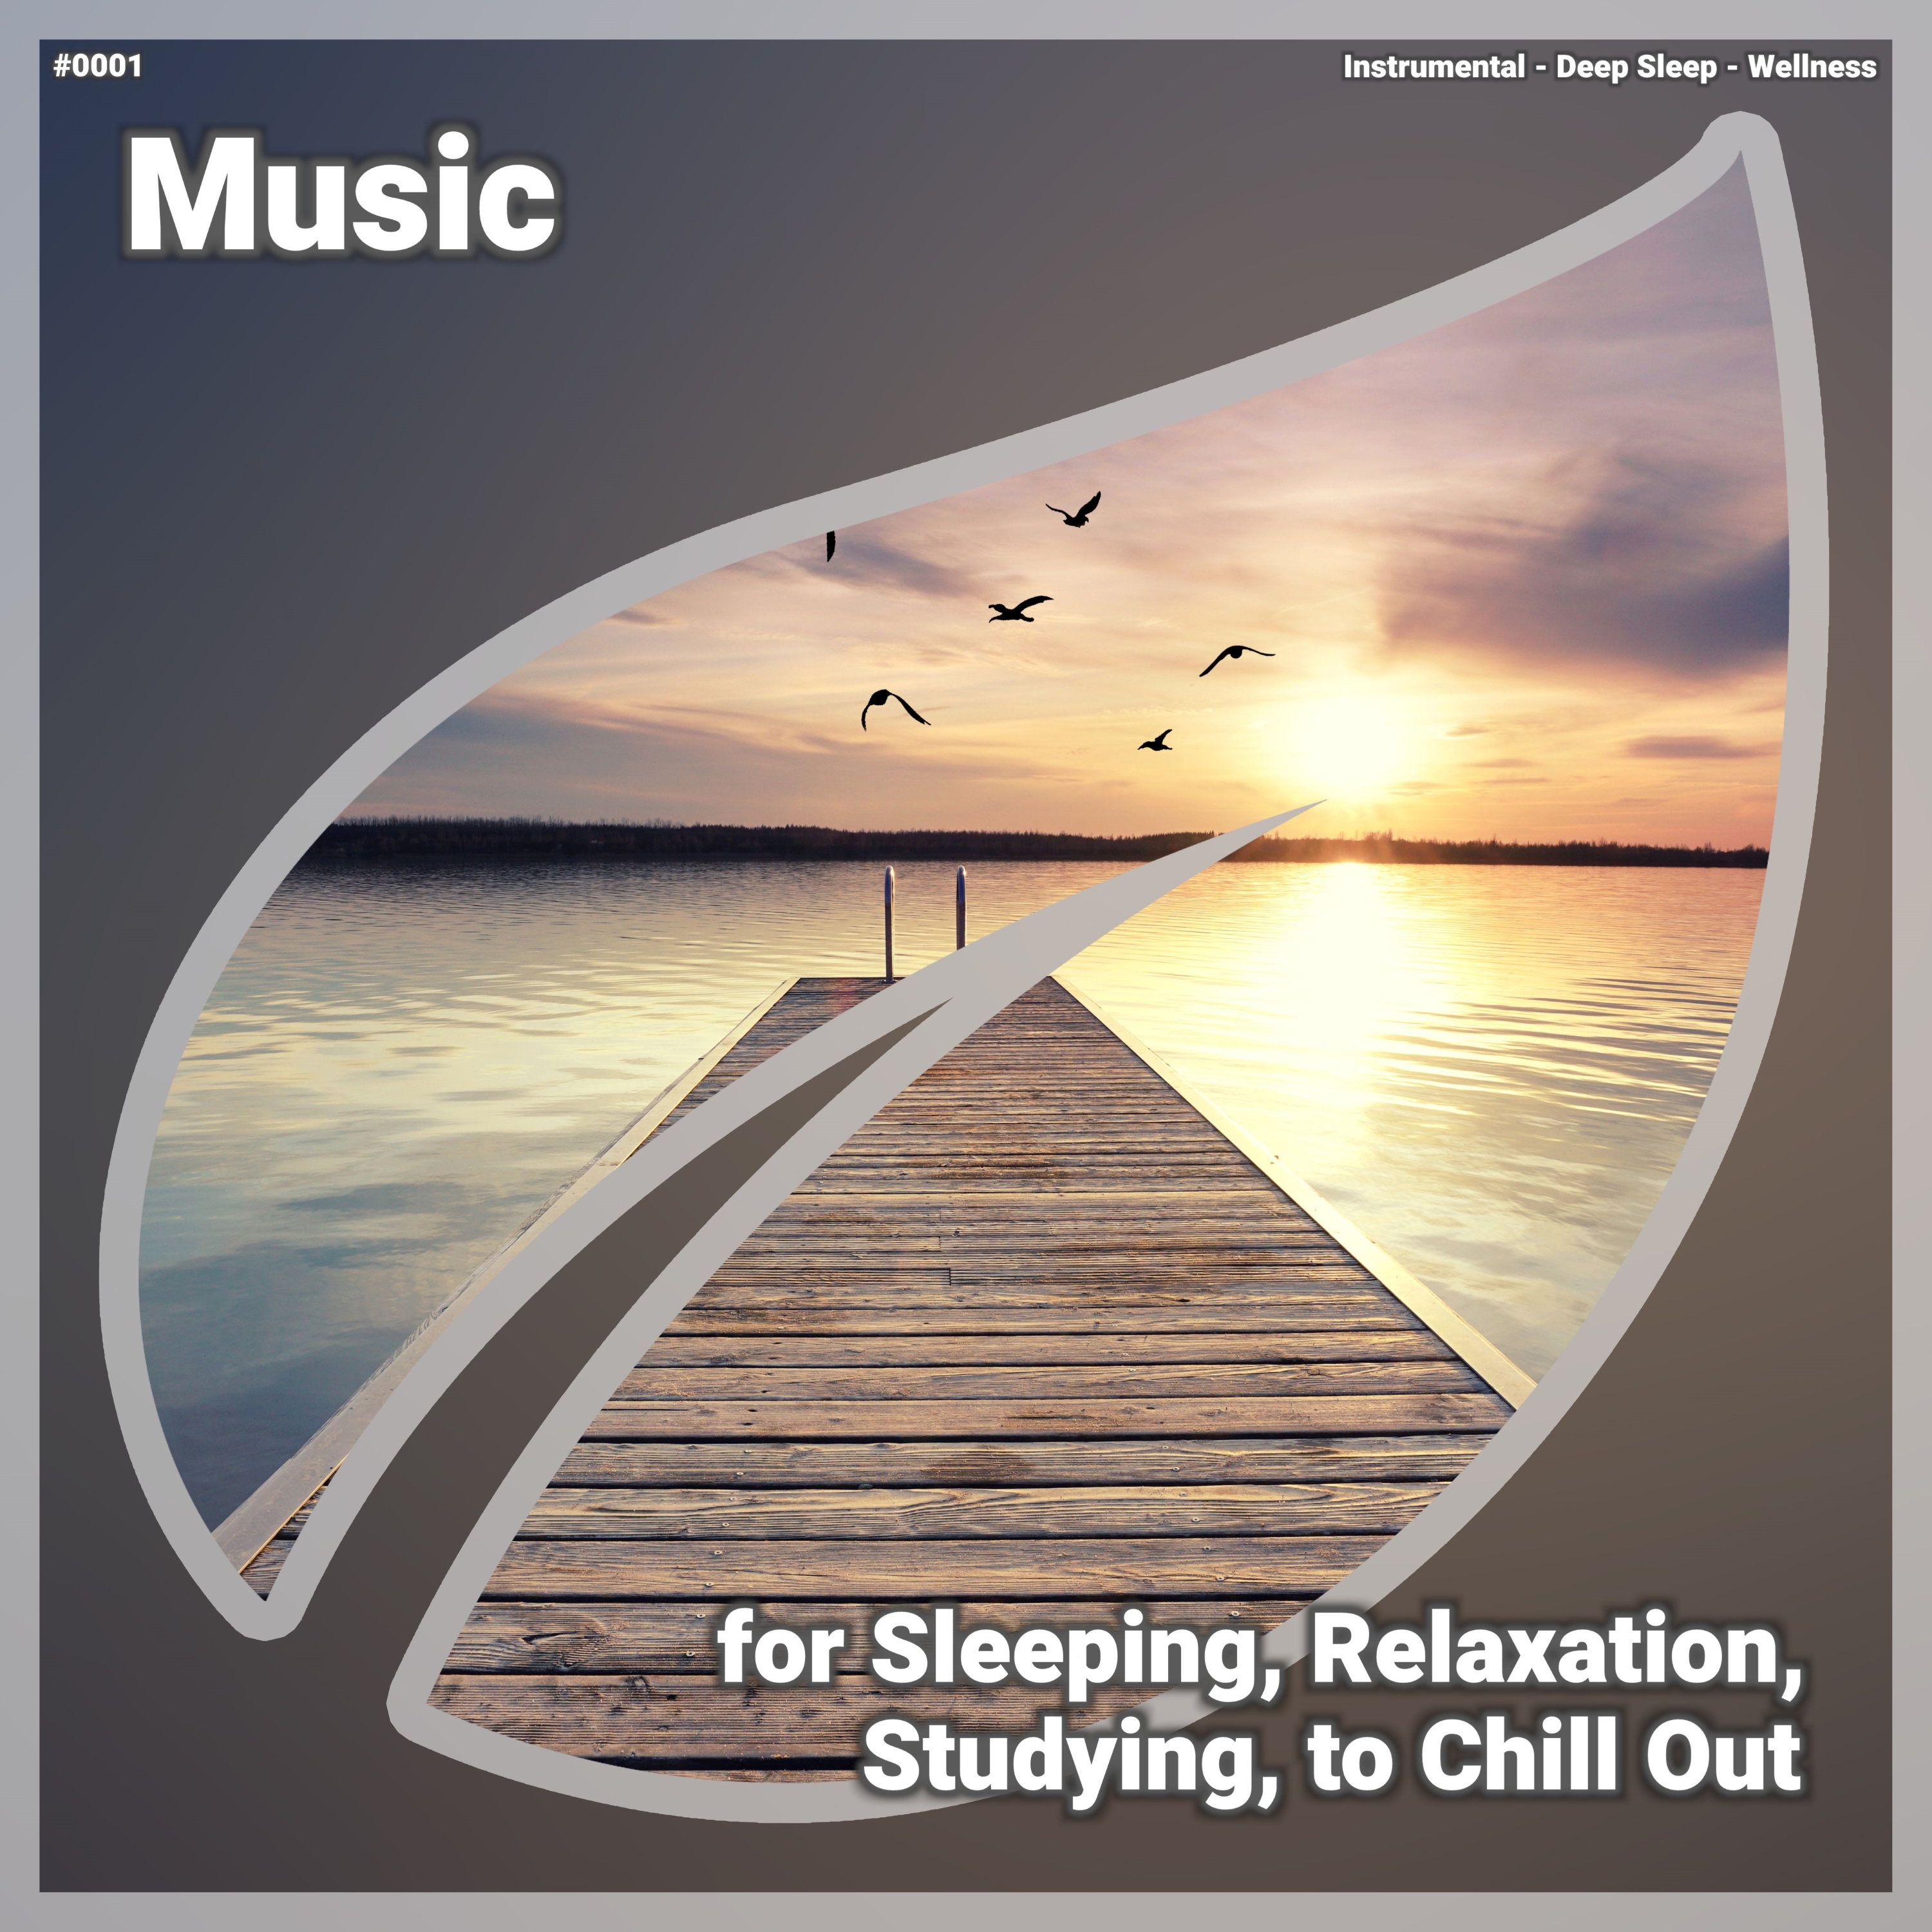 डाउनलोड करा Relaxing Music, Pt. 43